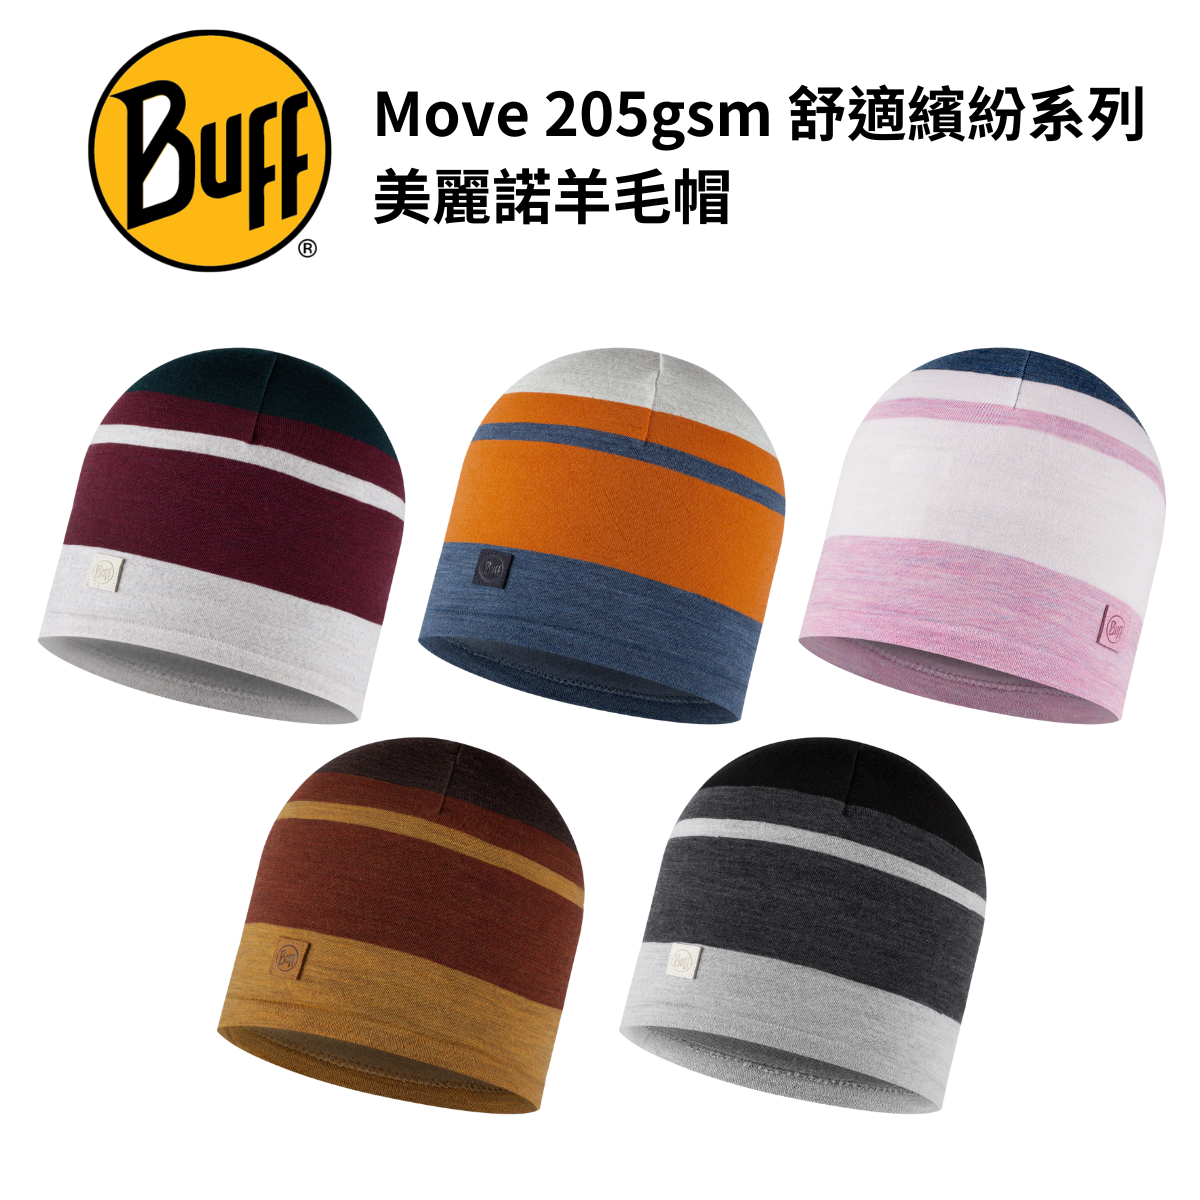 【BUFF】舒適繽紛 205gsm美麗諾羊毛帽